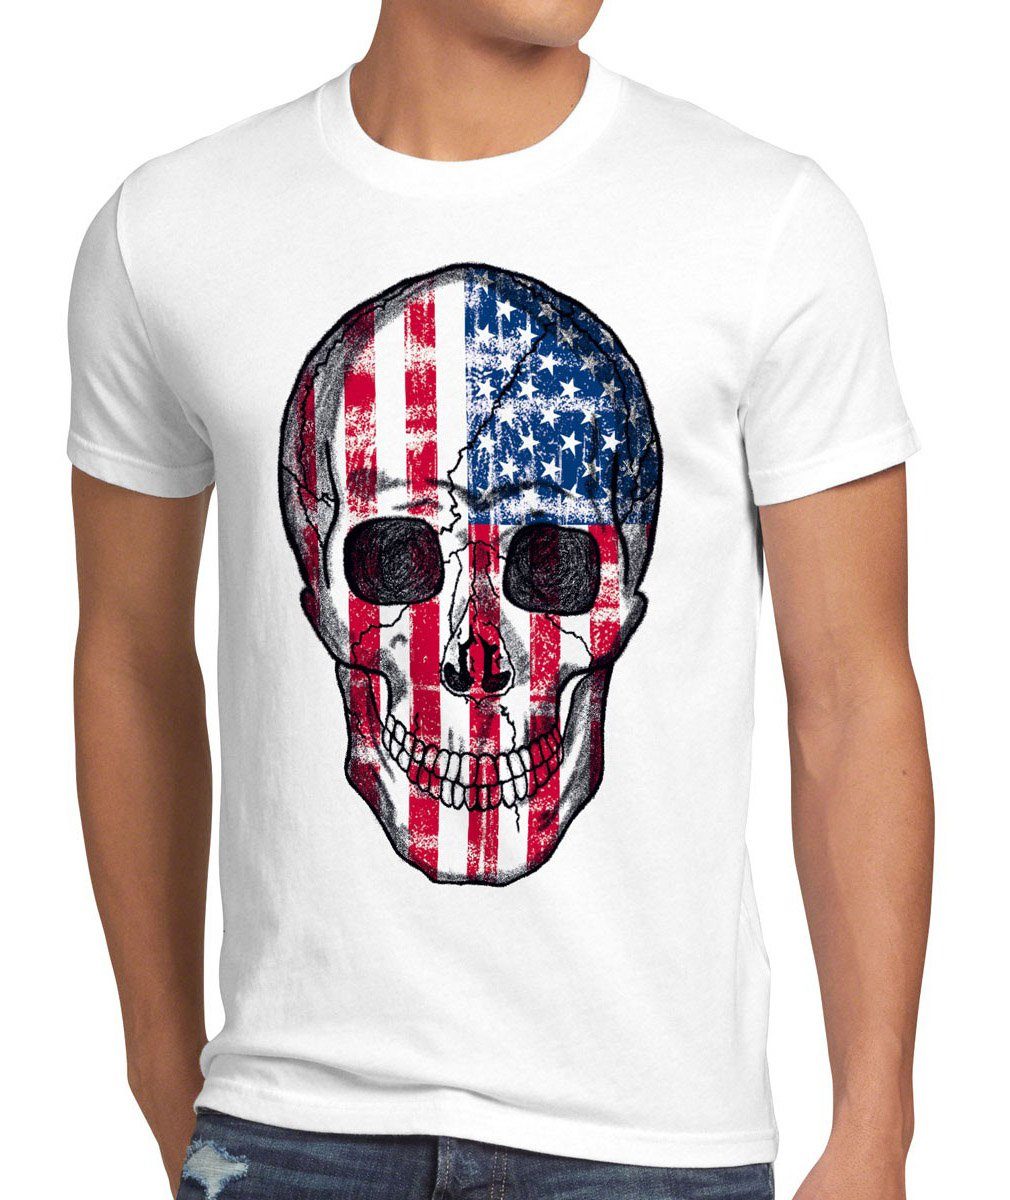 flagge amerika stripes stars Print-Shirt weiß Skull Herren USA Totenkopf style3 rocker knochen T-Shirt